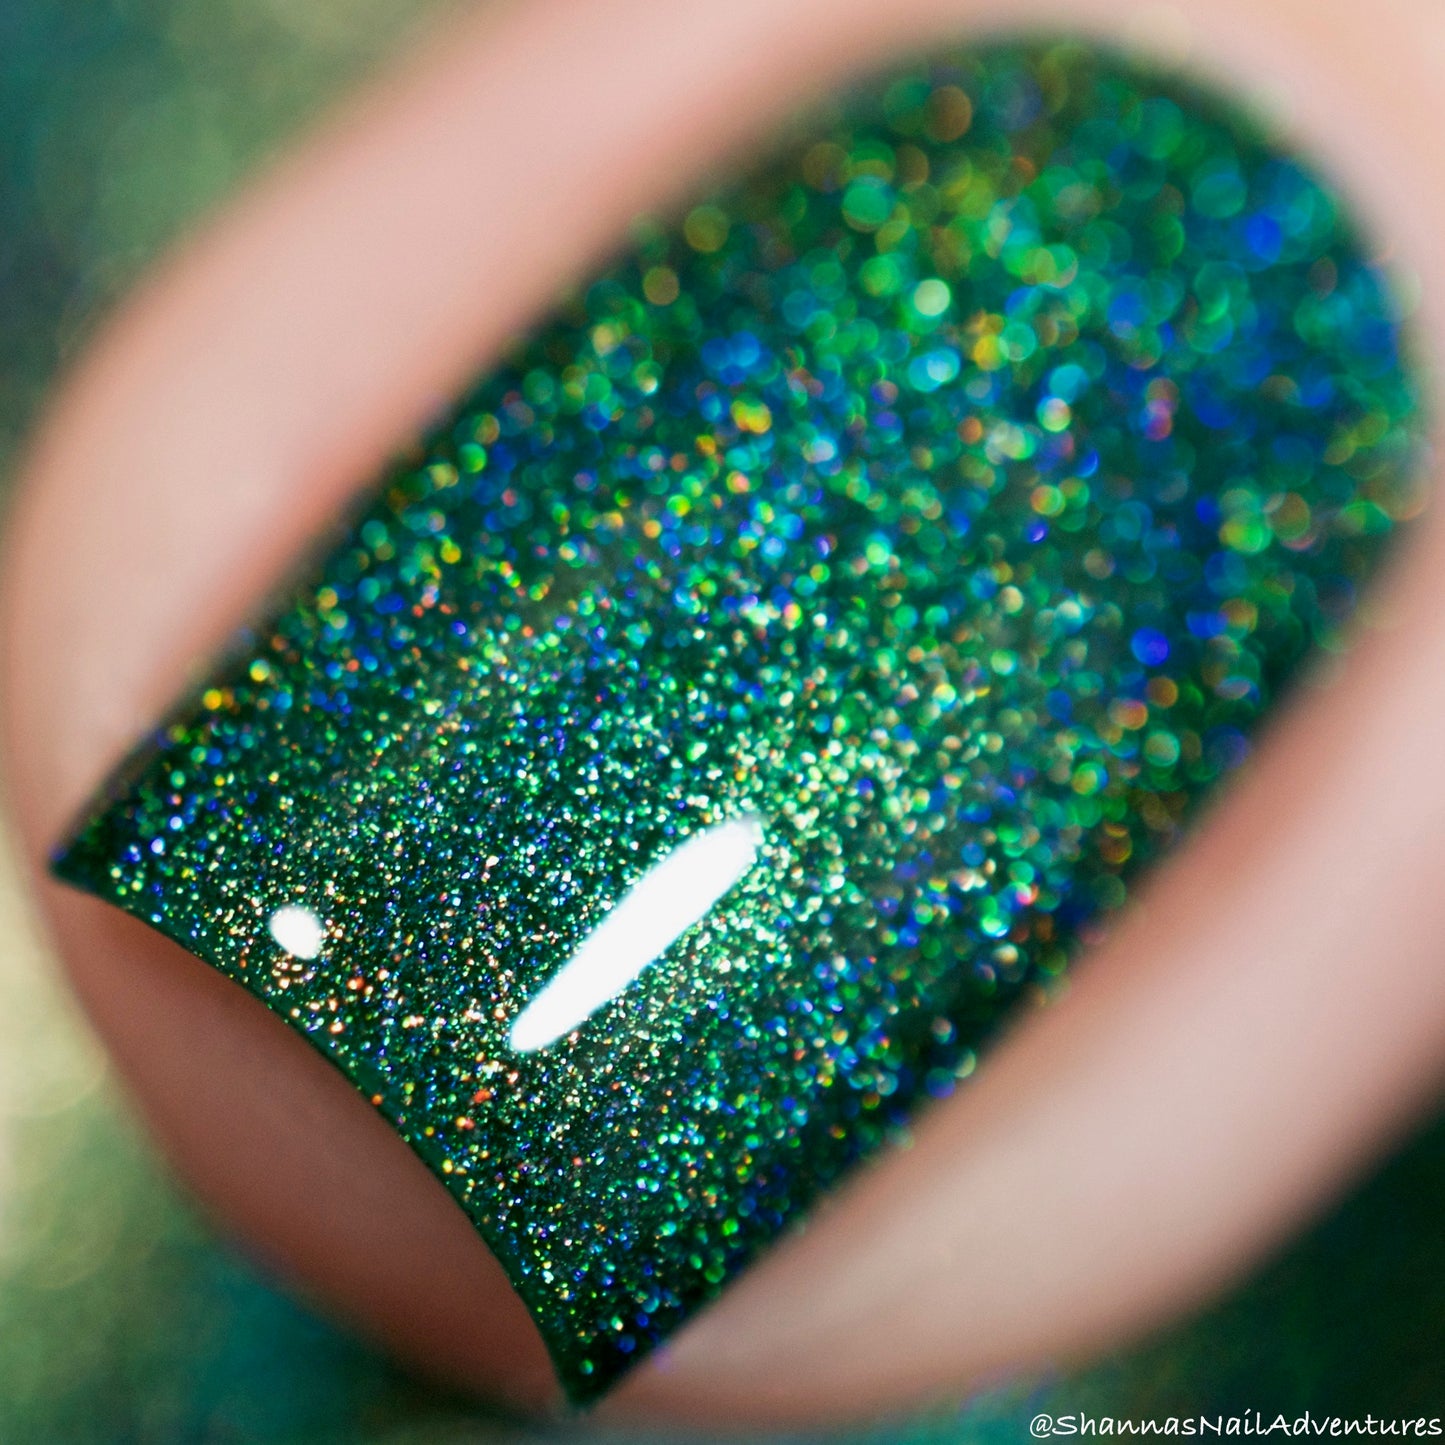 Emerald - Green Holographic Polish - Gemstone Collection Pt. 2 - Dam Nail Polish